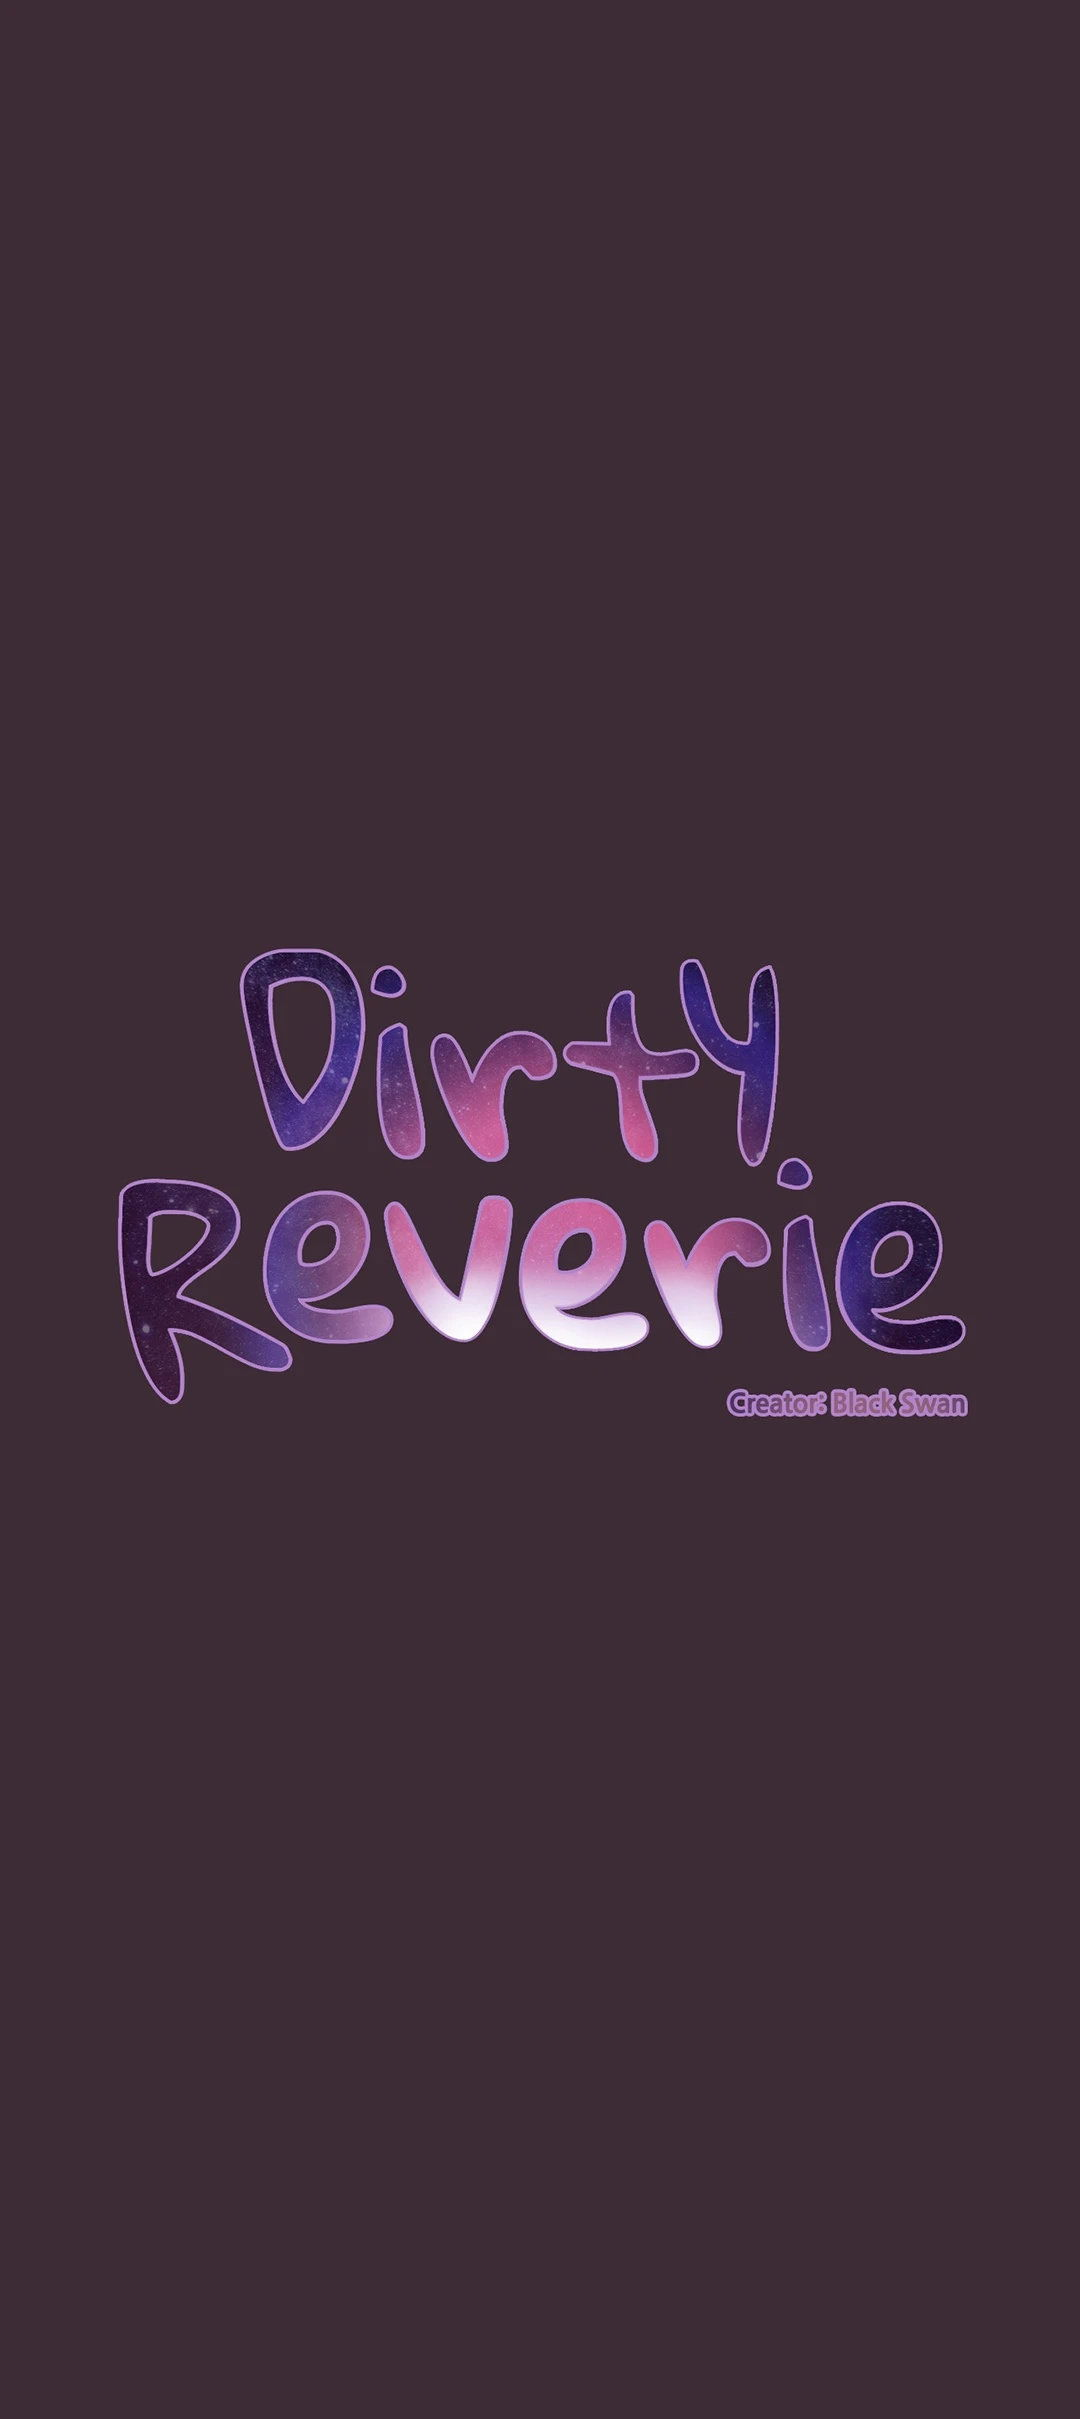 dirty-reverie-chap-8-0